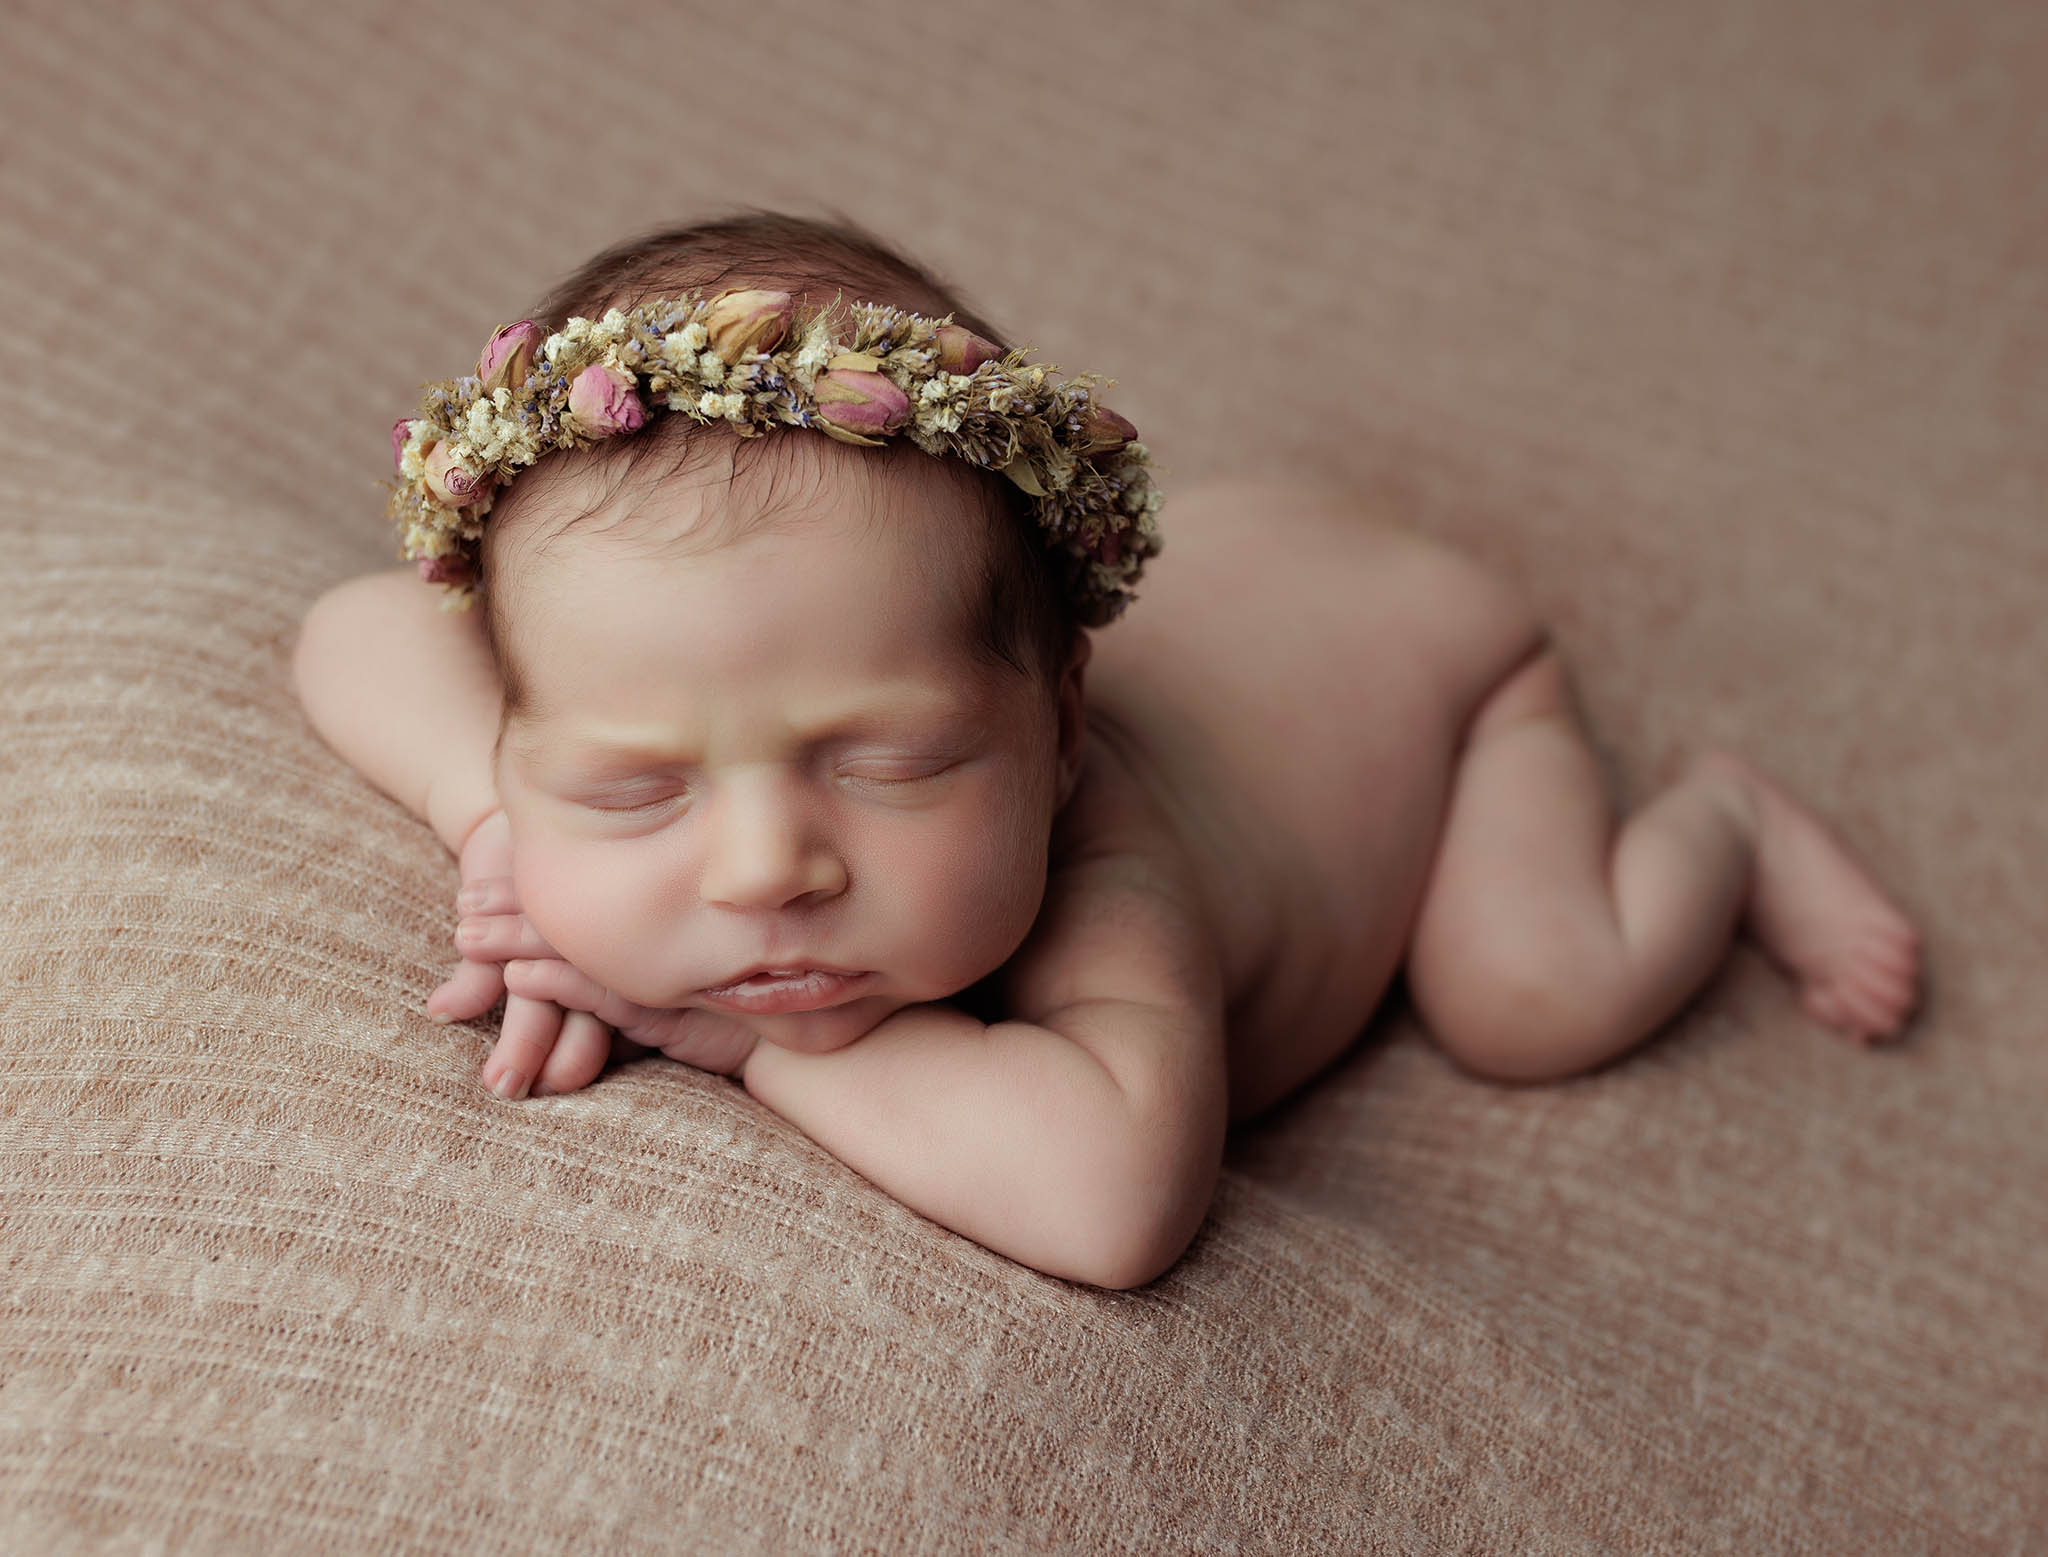 Baby boy on green with eyes open by Newborn Photographer Milton Keynes